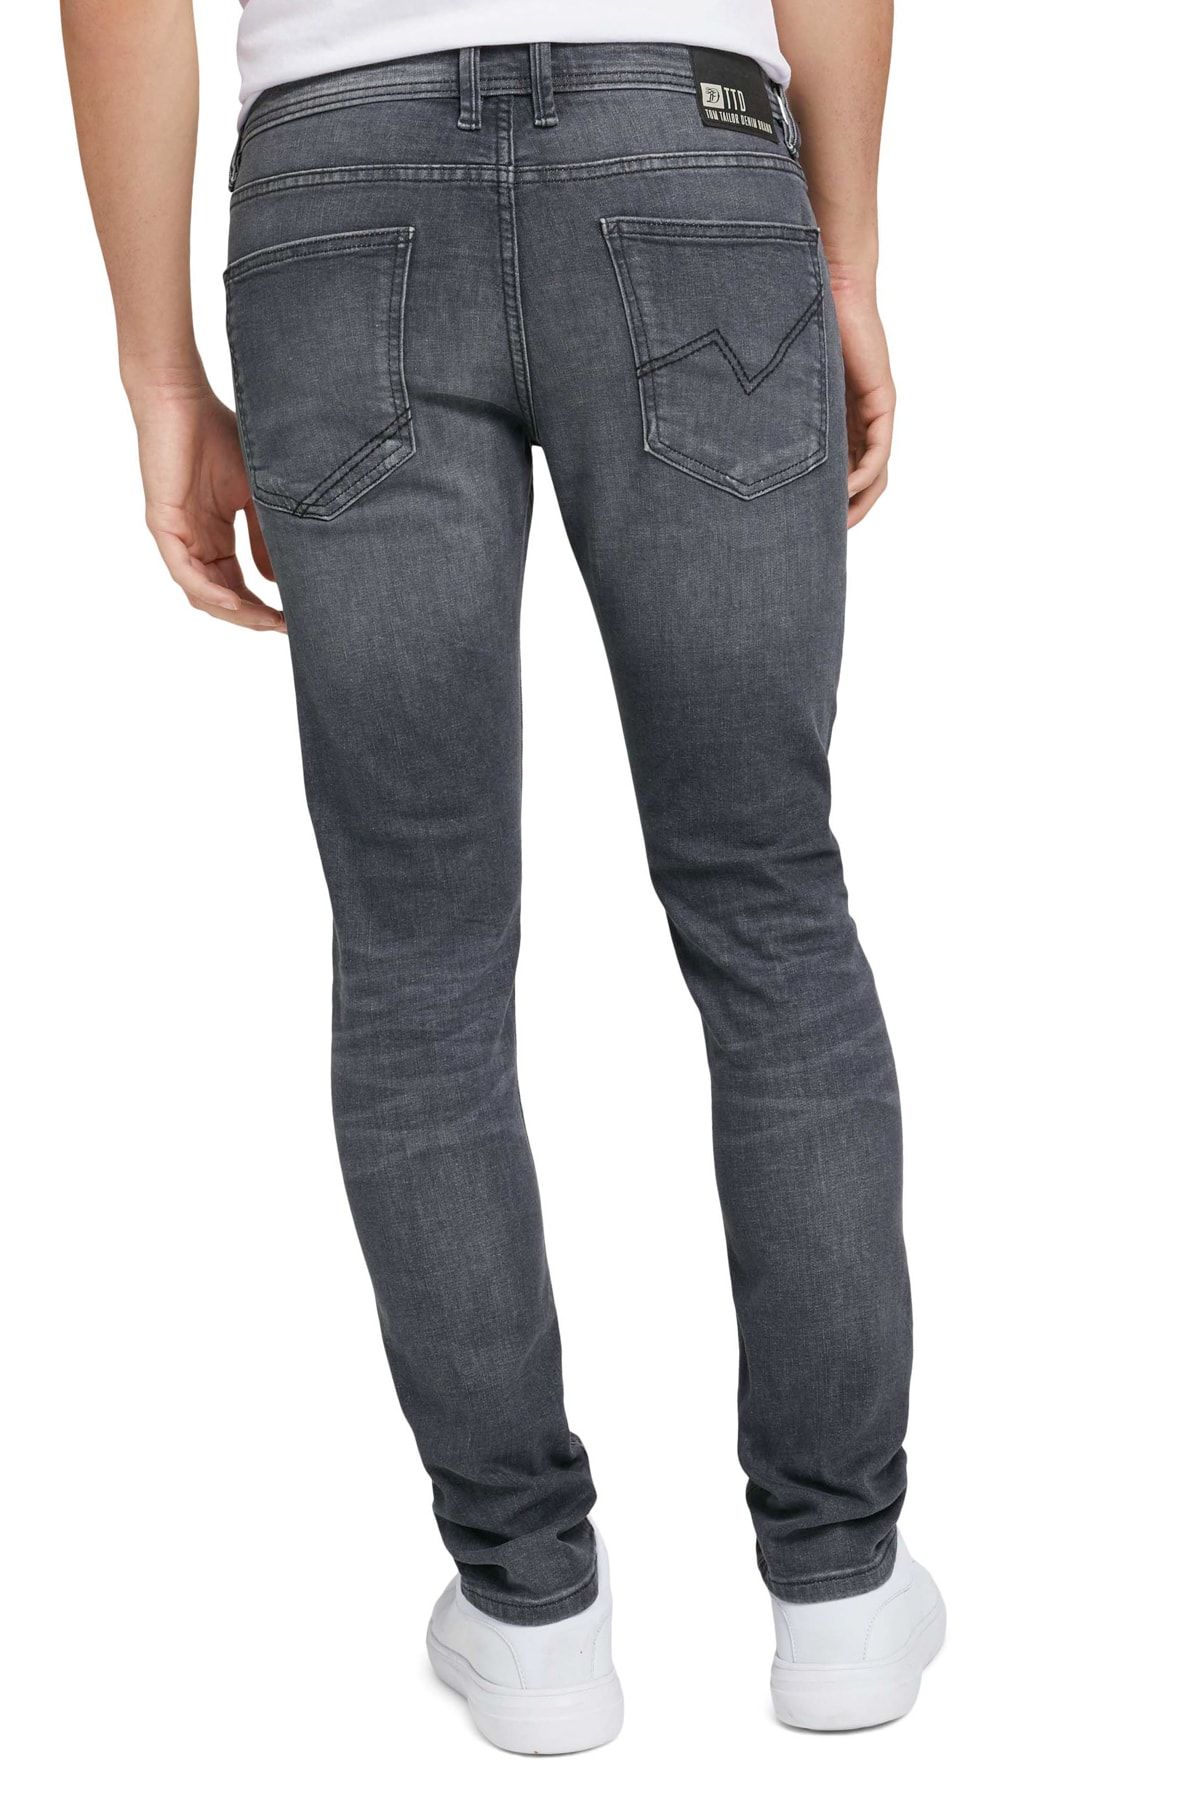 TOM TAILOR DENIM SLIM PIERS - Slim fit jeans - light stone blue denim/light-blue  denim - Zalando.de